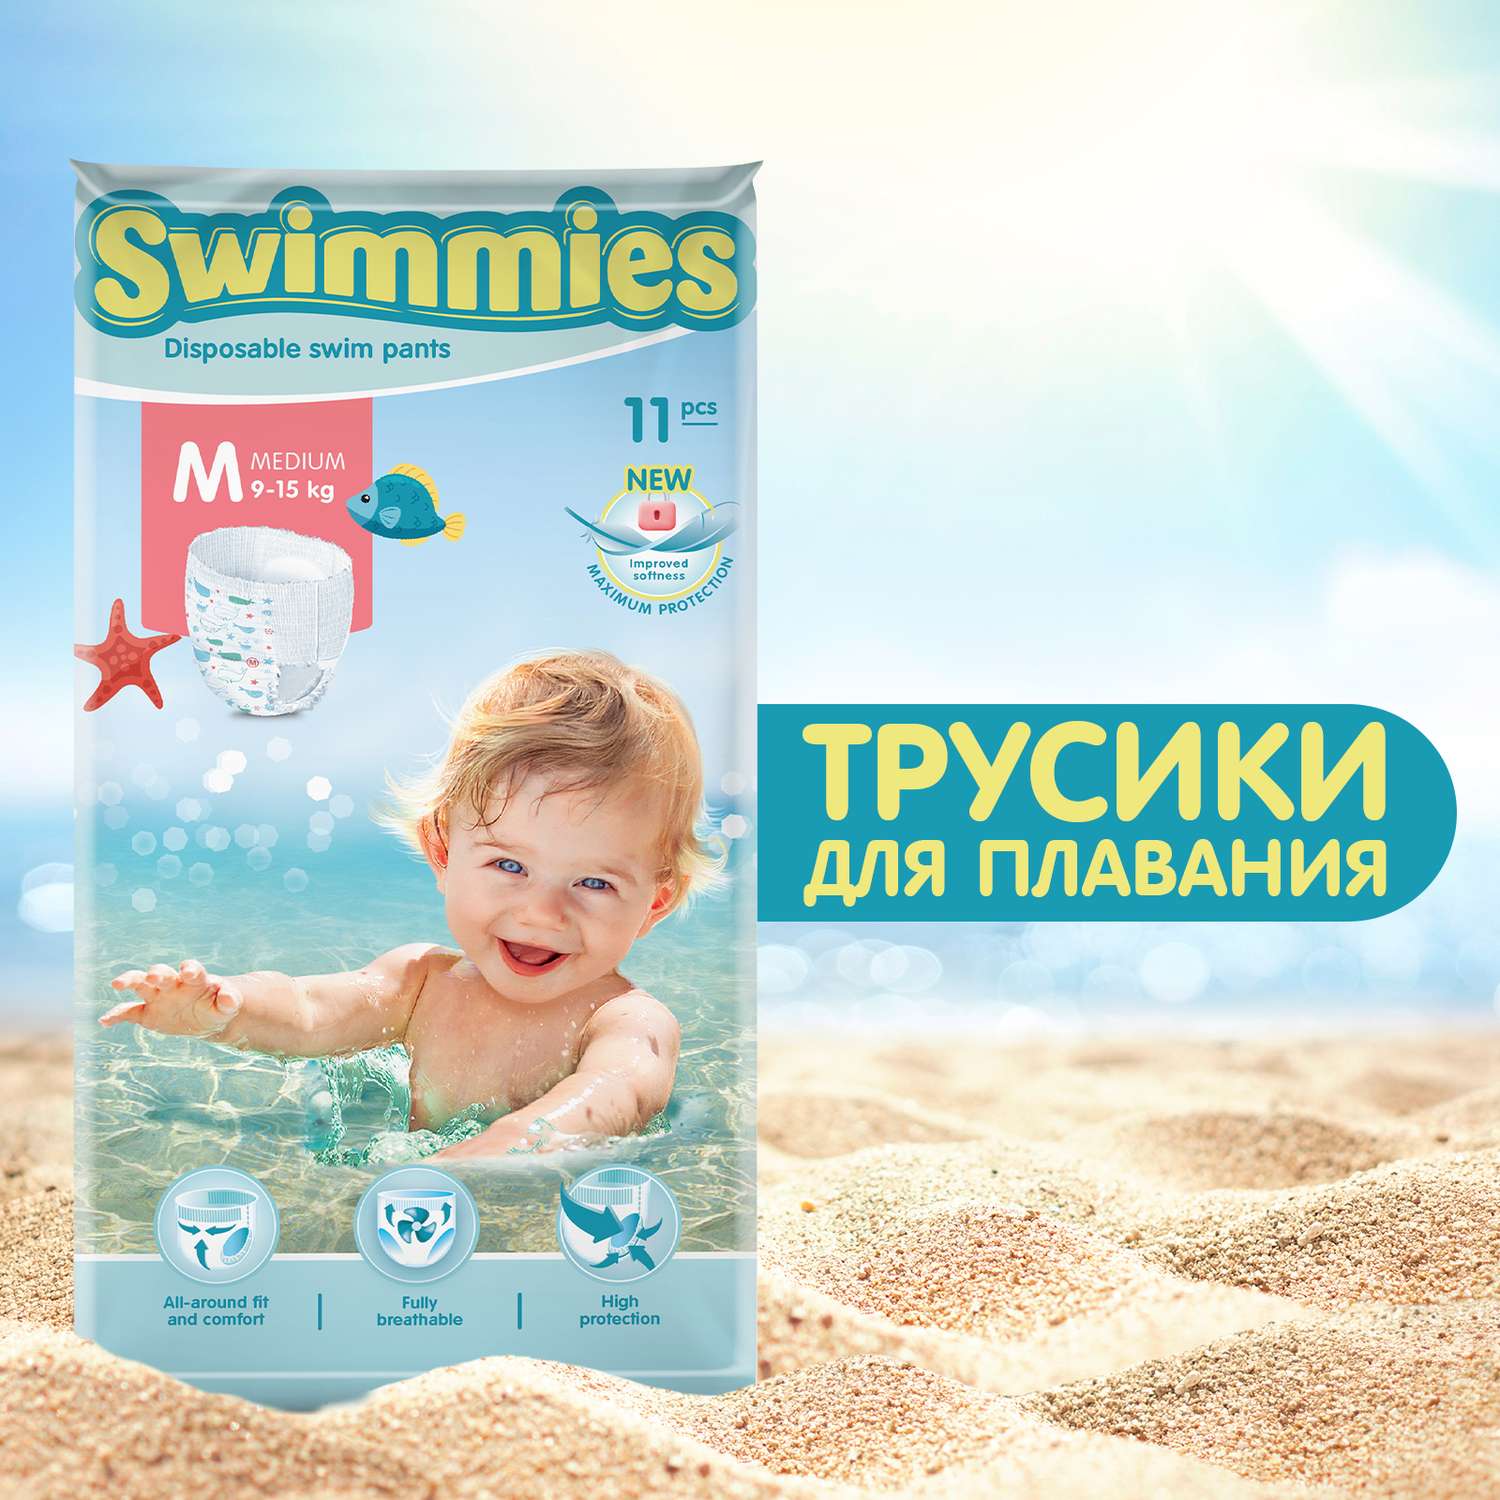 Детские трусики для плавания Swimmies размер M 11 шт - фото 1